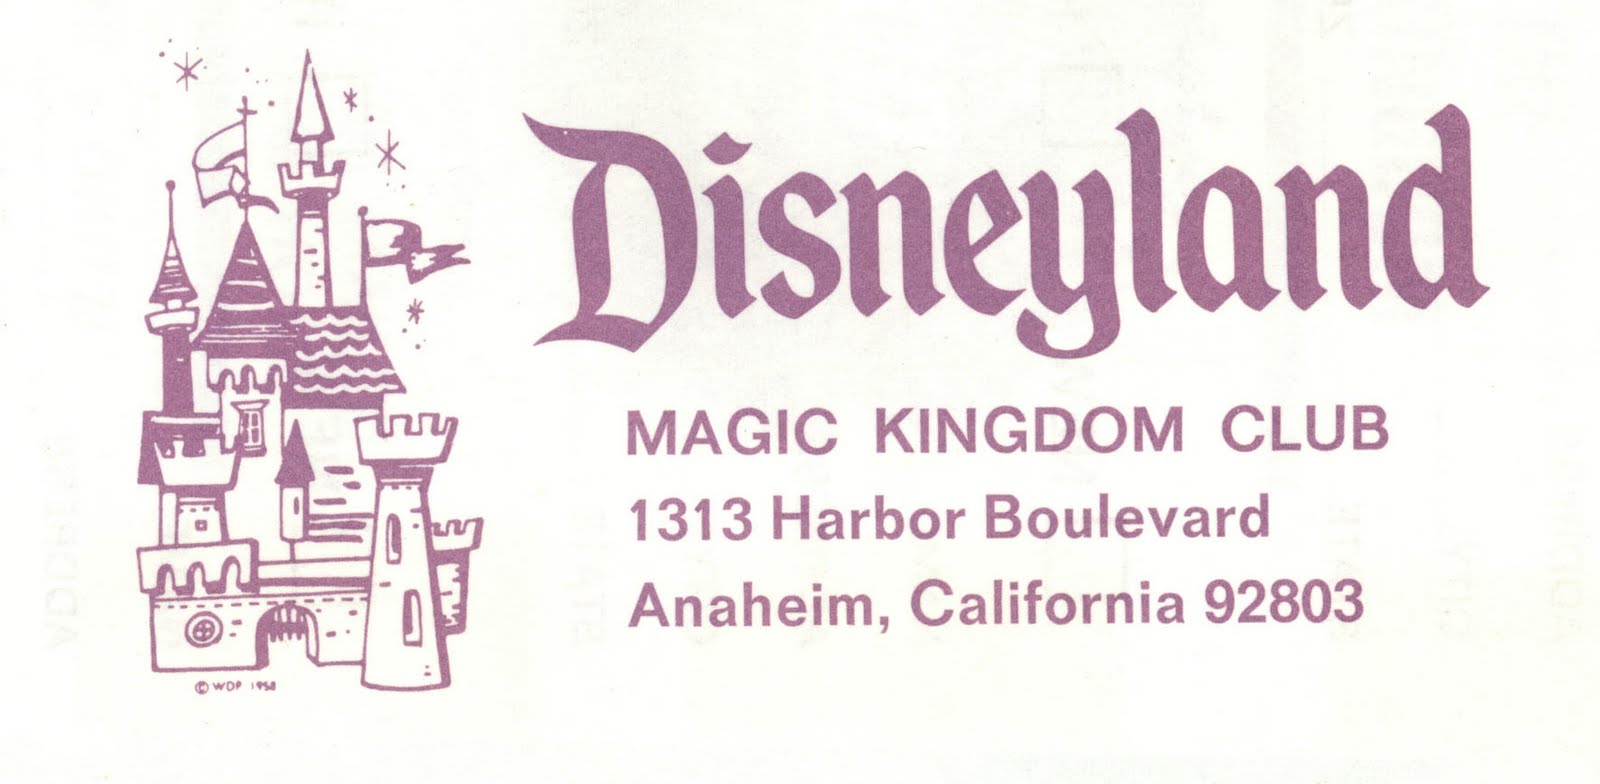 Walt chose Disney's 1313 address in honor of Mickey